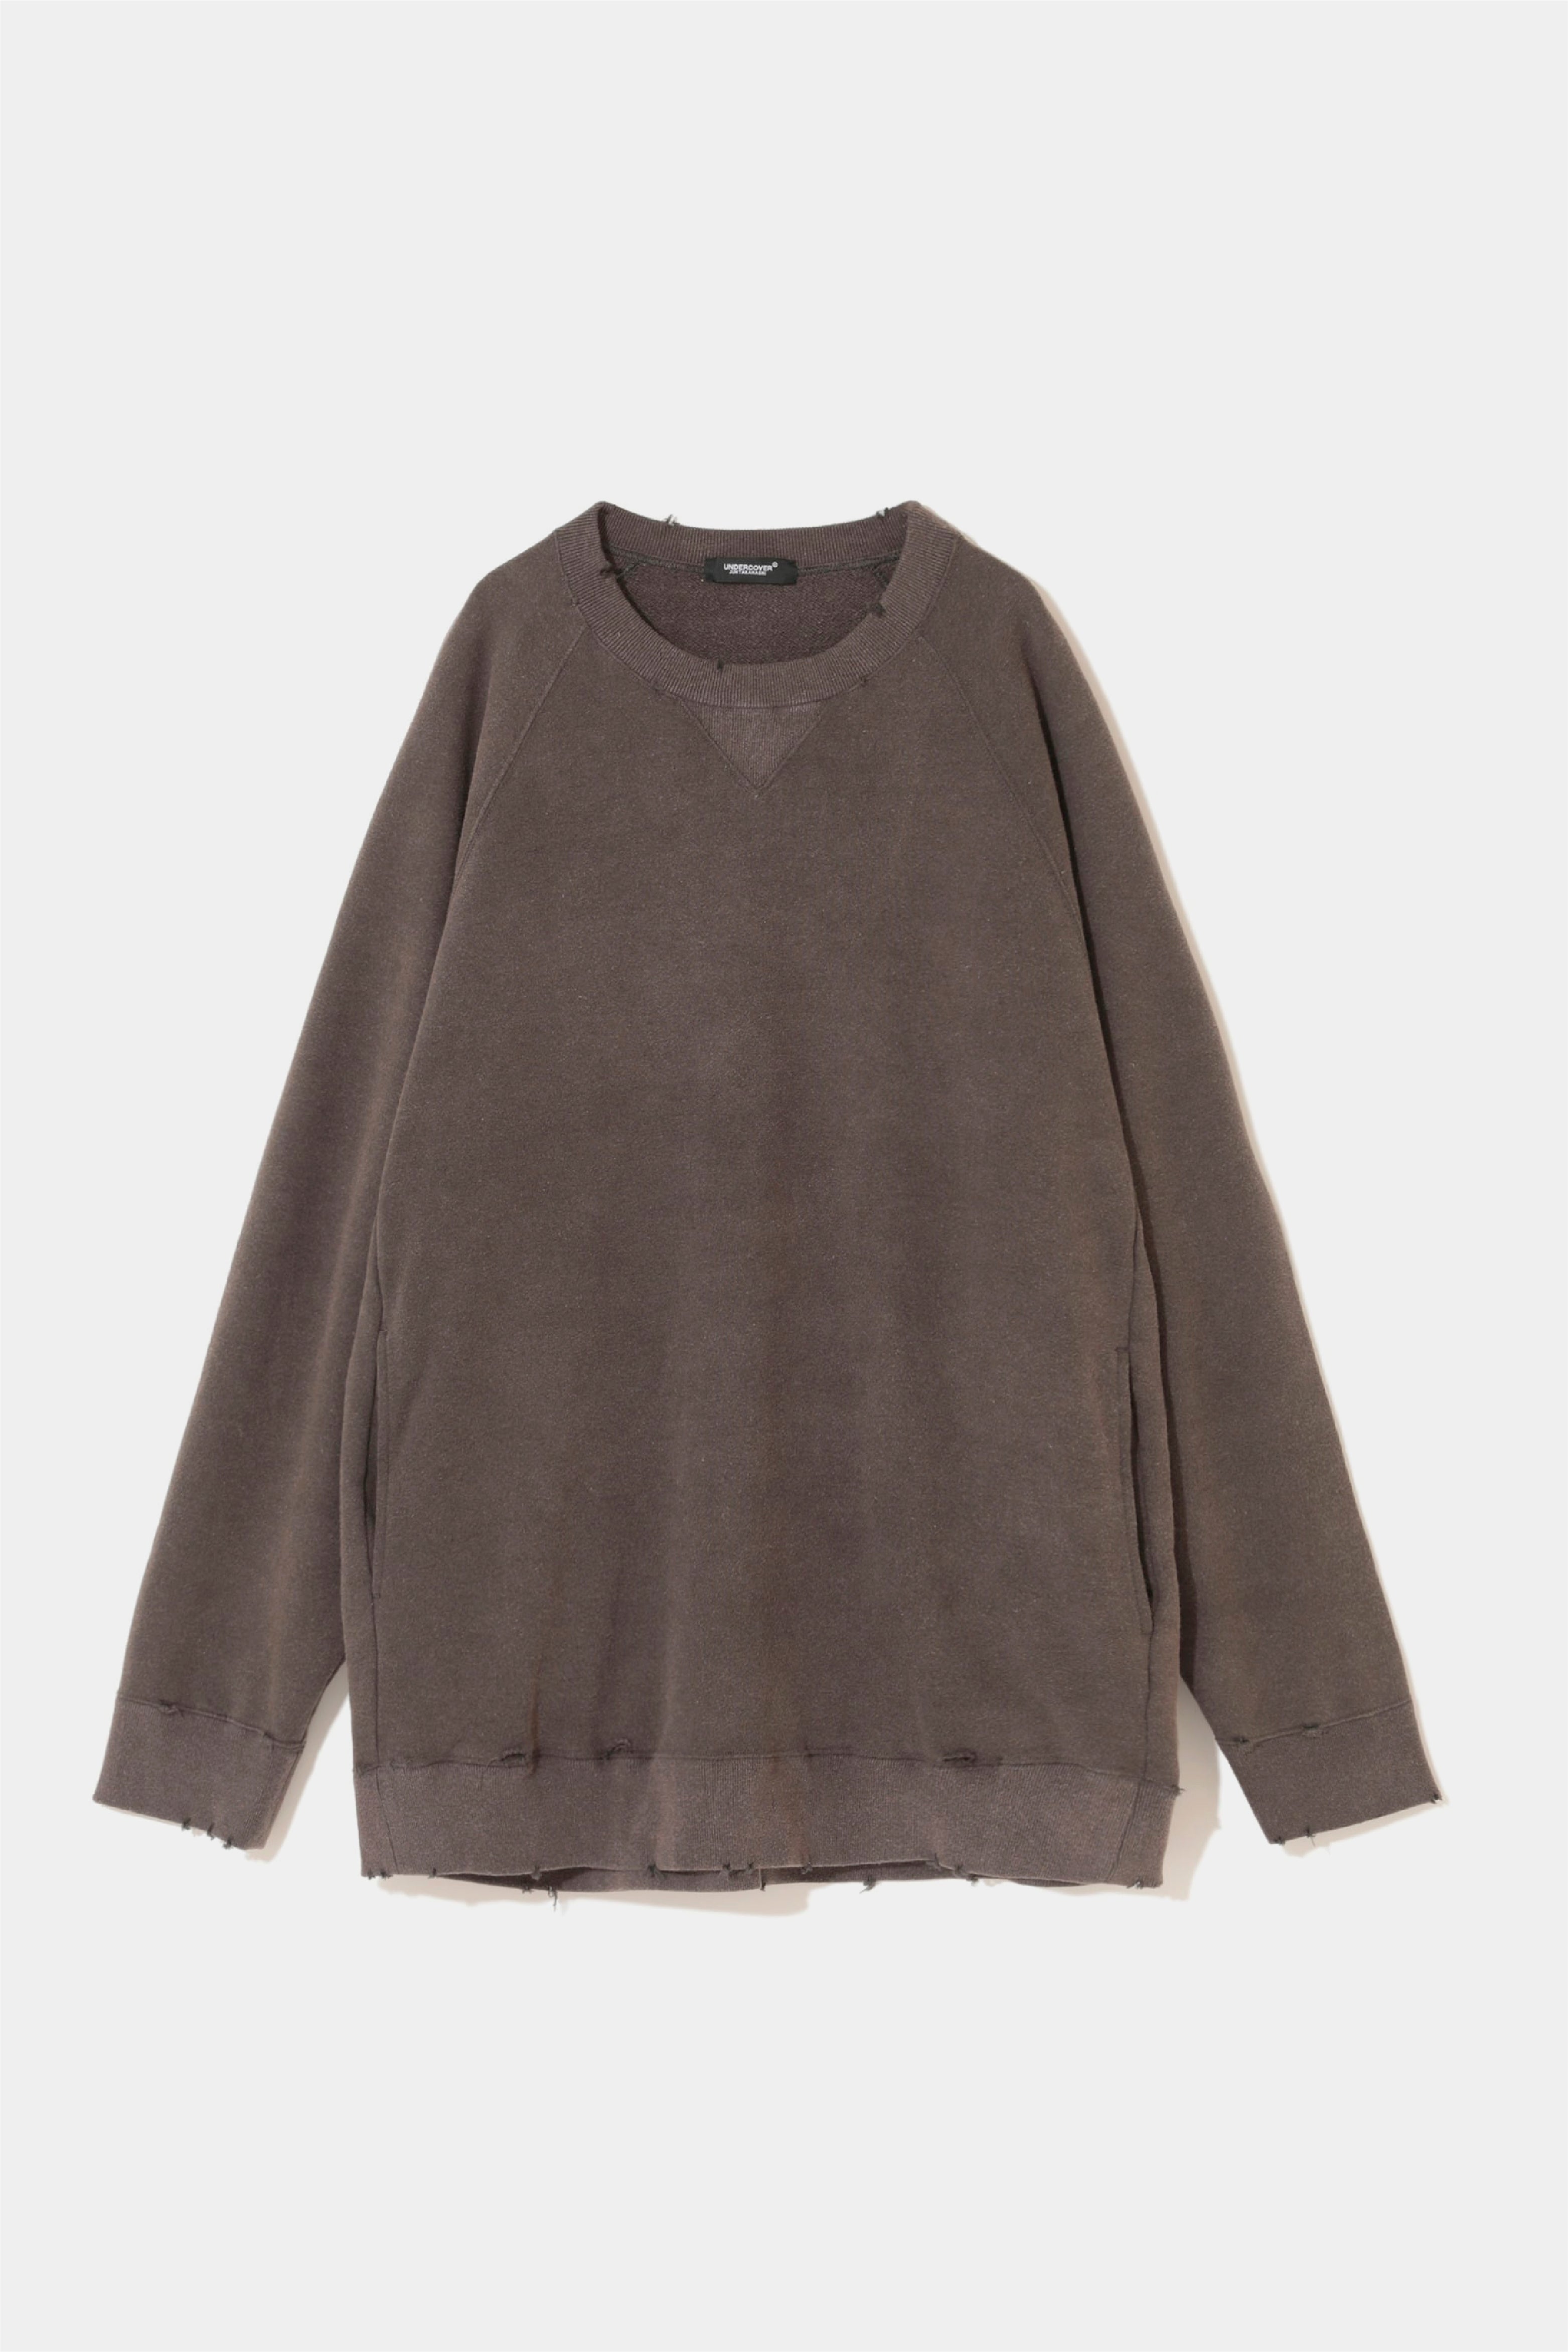 Selectshop FRAME - UNDERCOVER Sweat Shirt Sweats-Knits Concept Store Dubai